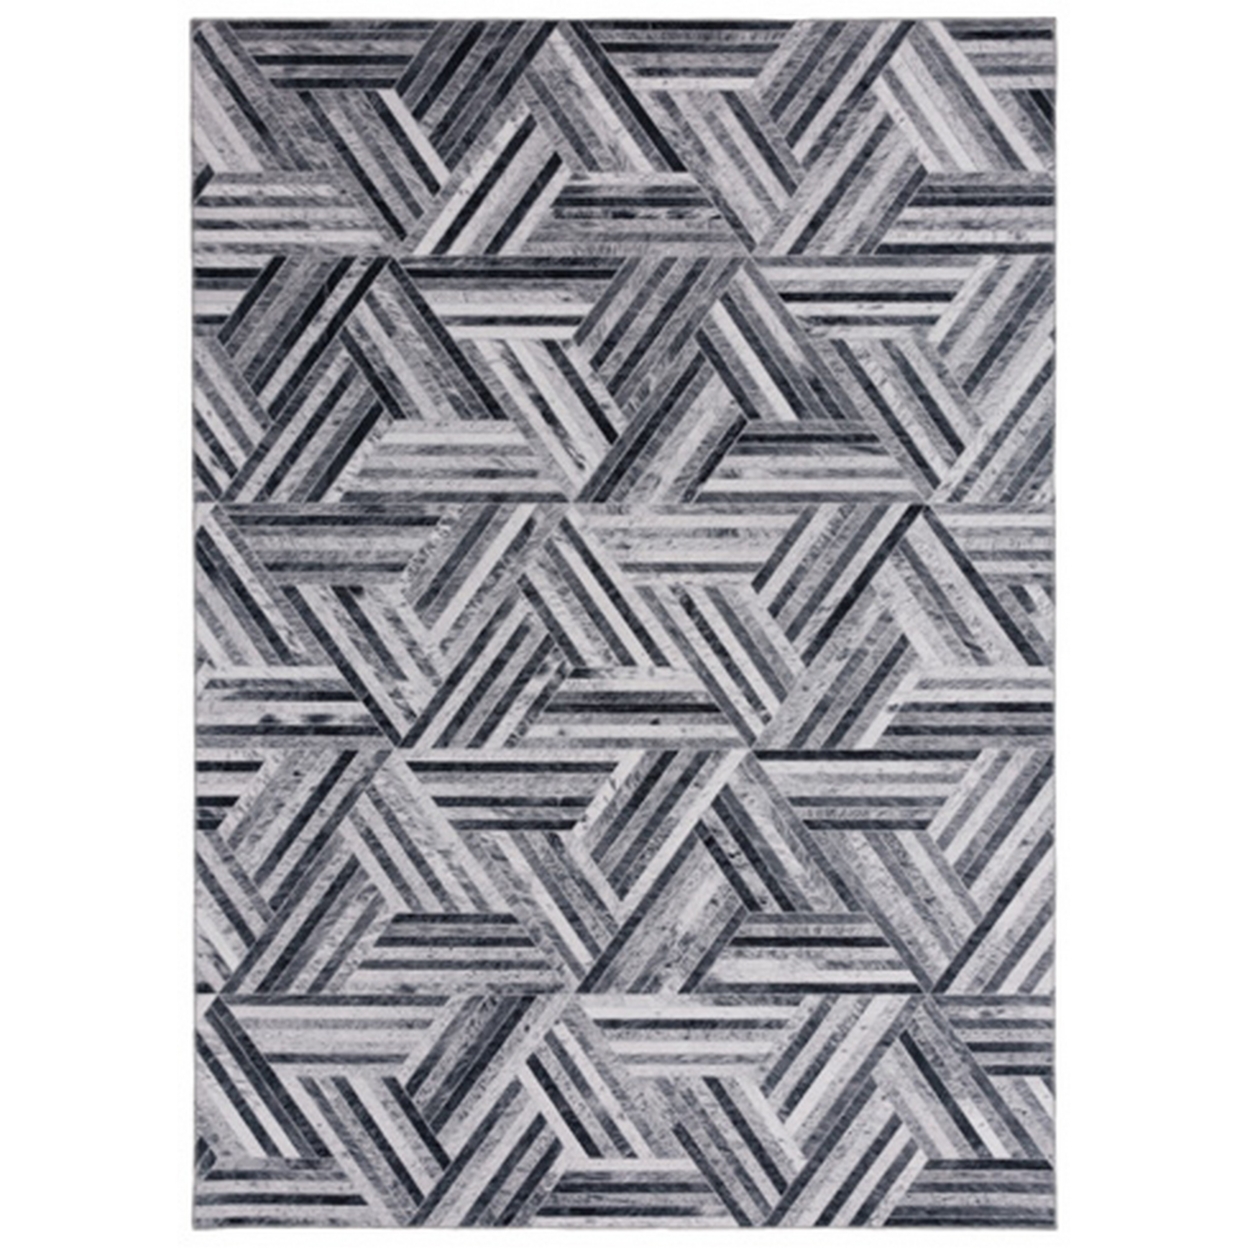 Geni 5 X 7 Area Rug, Gray And Cream Polyester, Geometric Trellis Print- Saltoro Sherpi